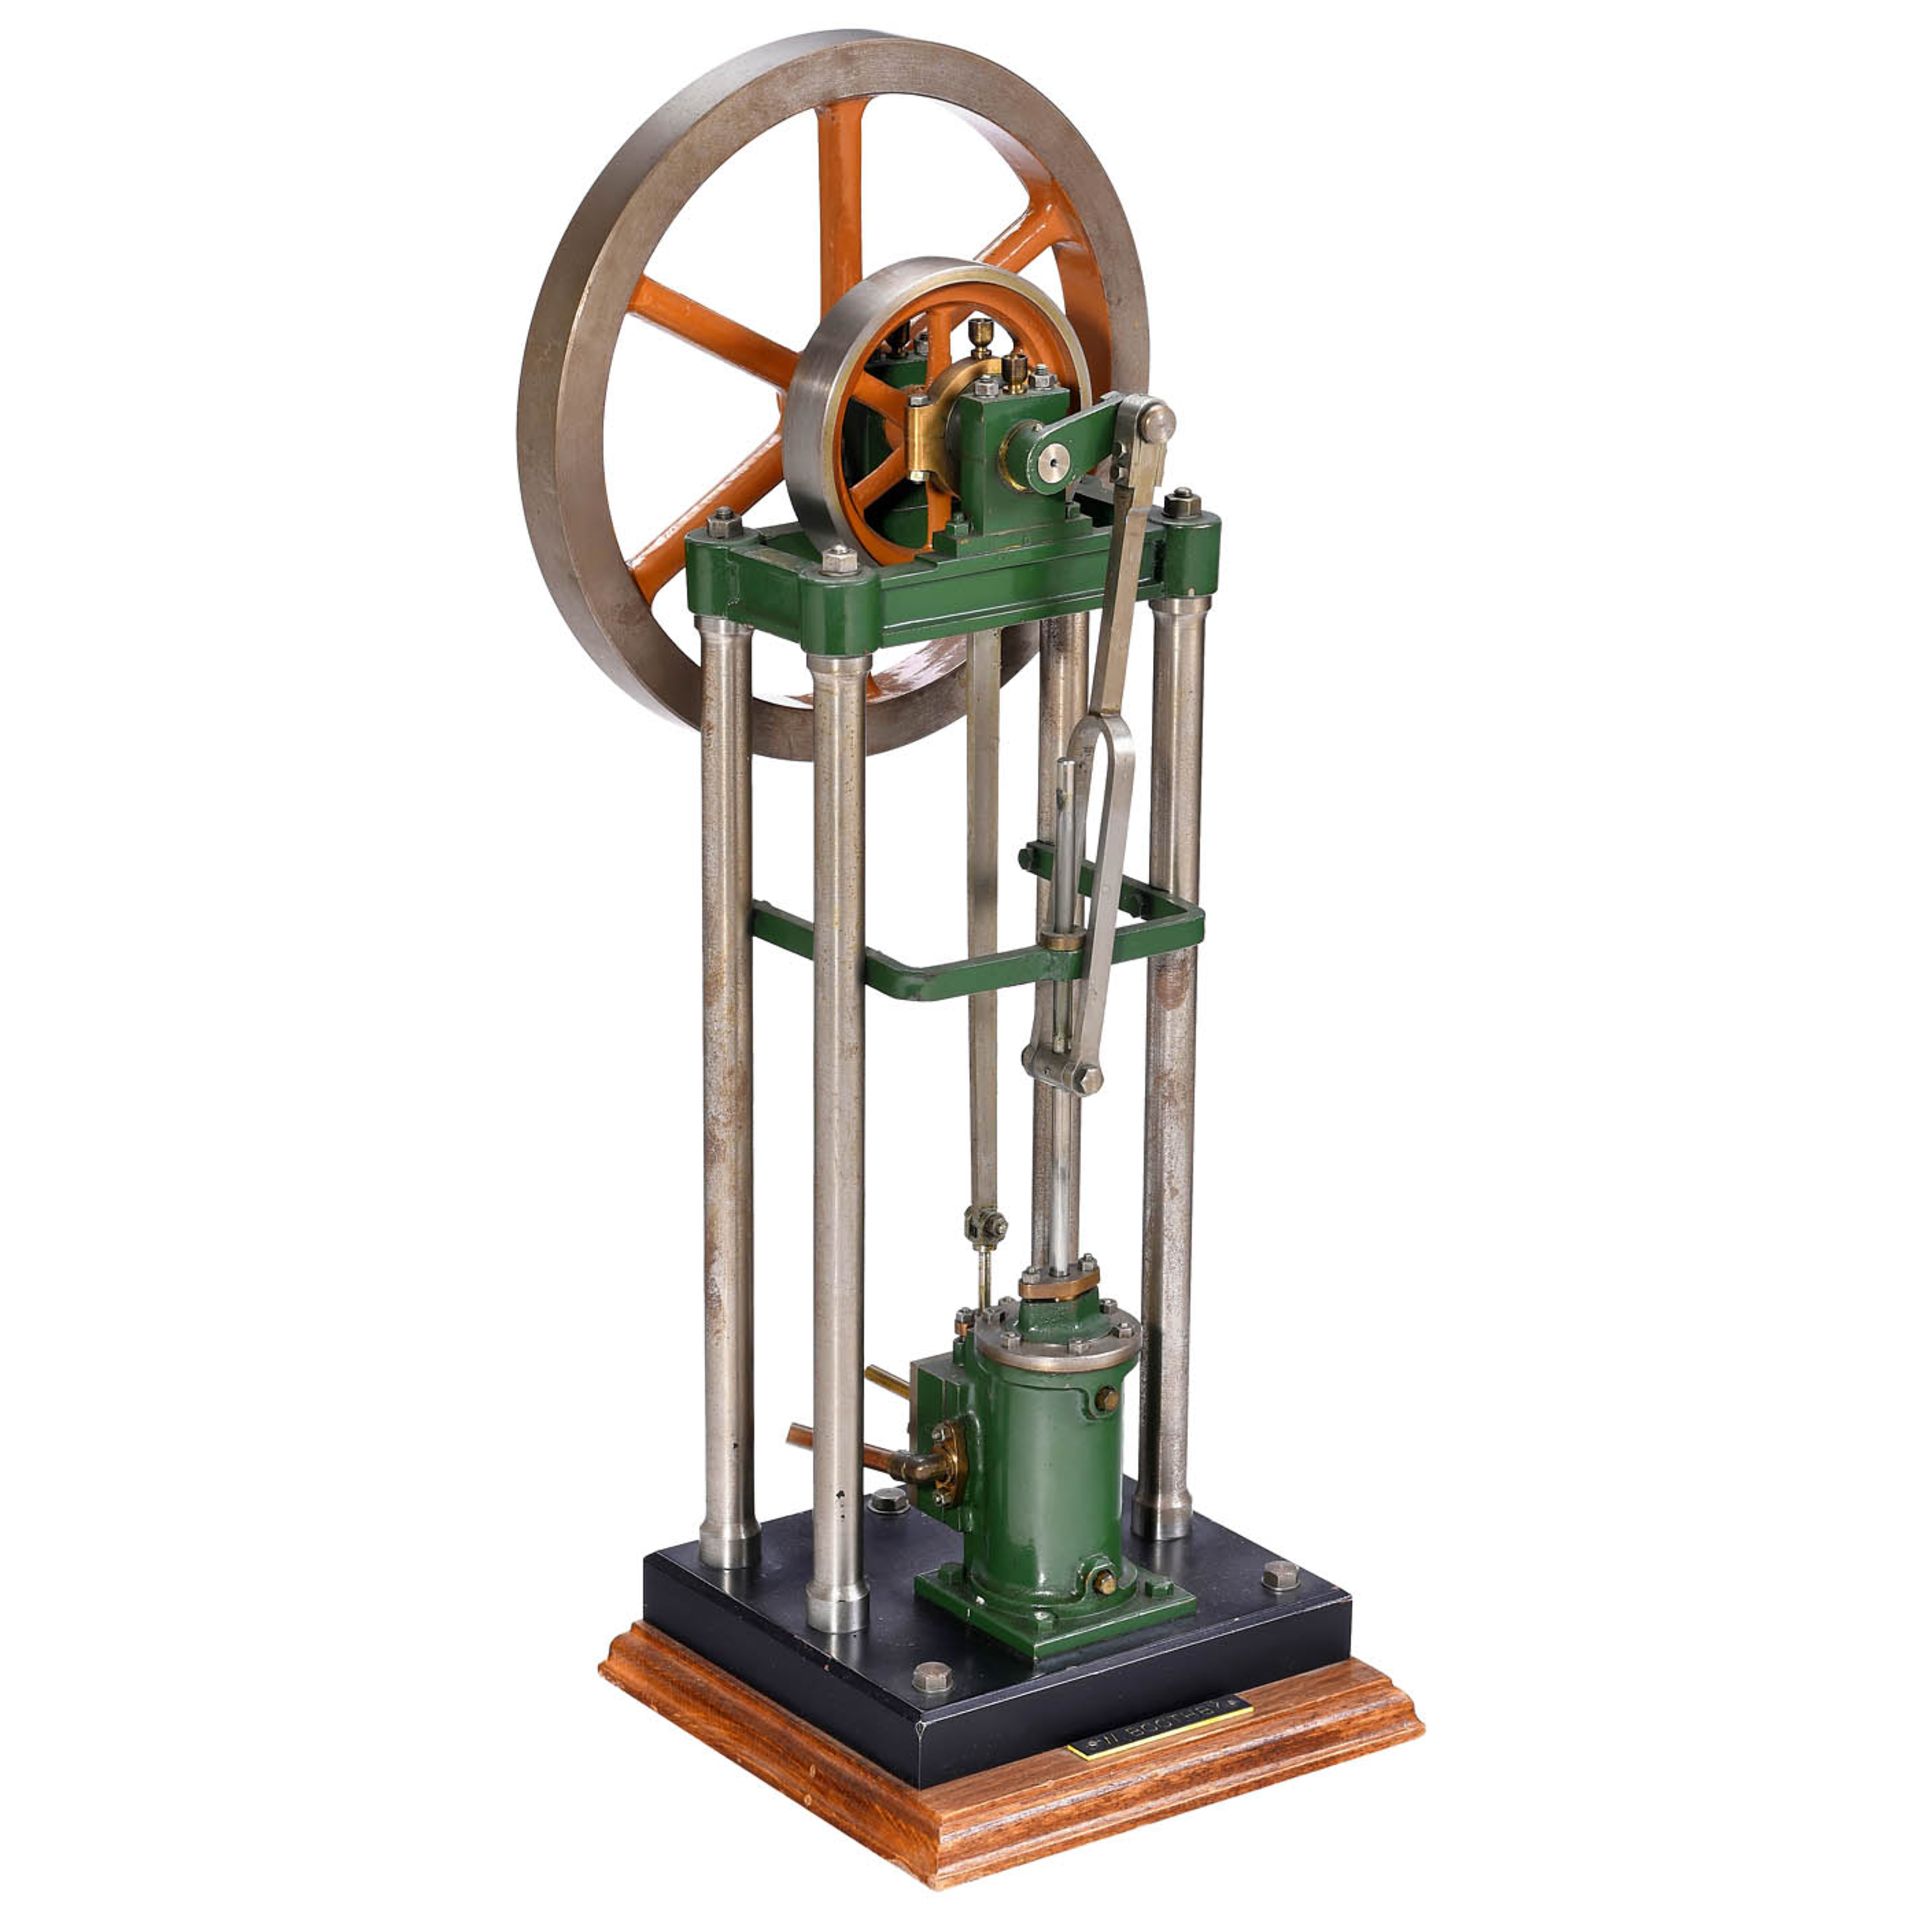 Working Model of a Single-Cylinder Overcrank Steam Engine, c. 1980